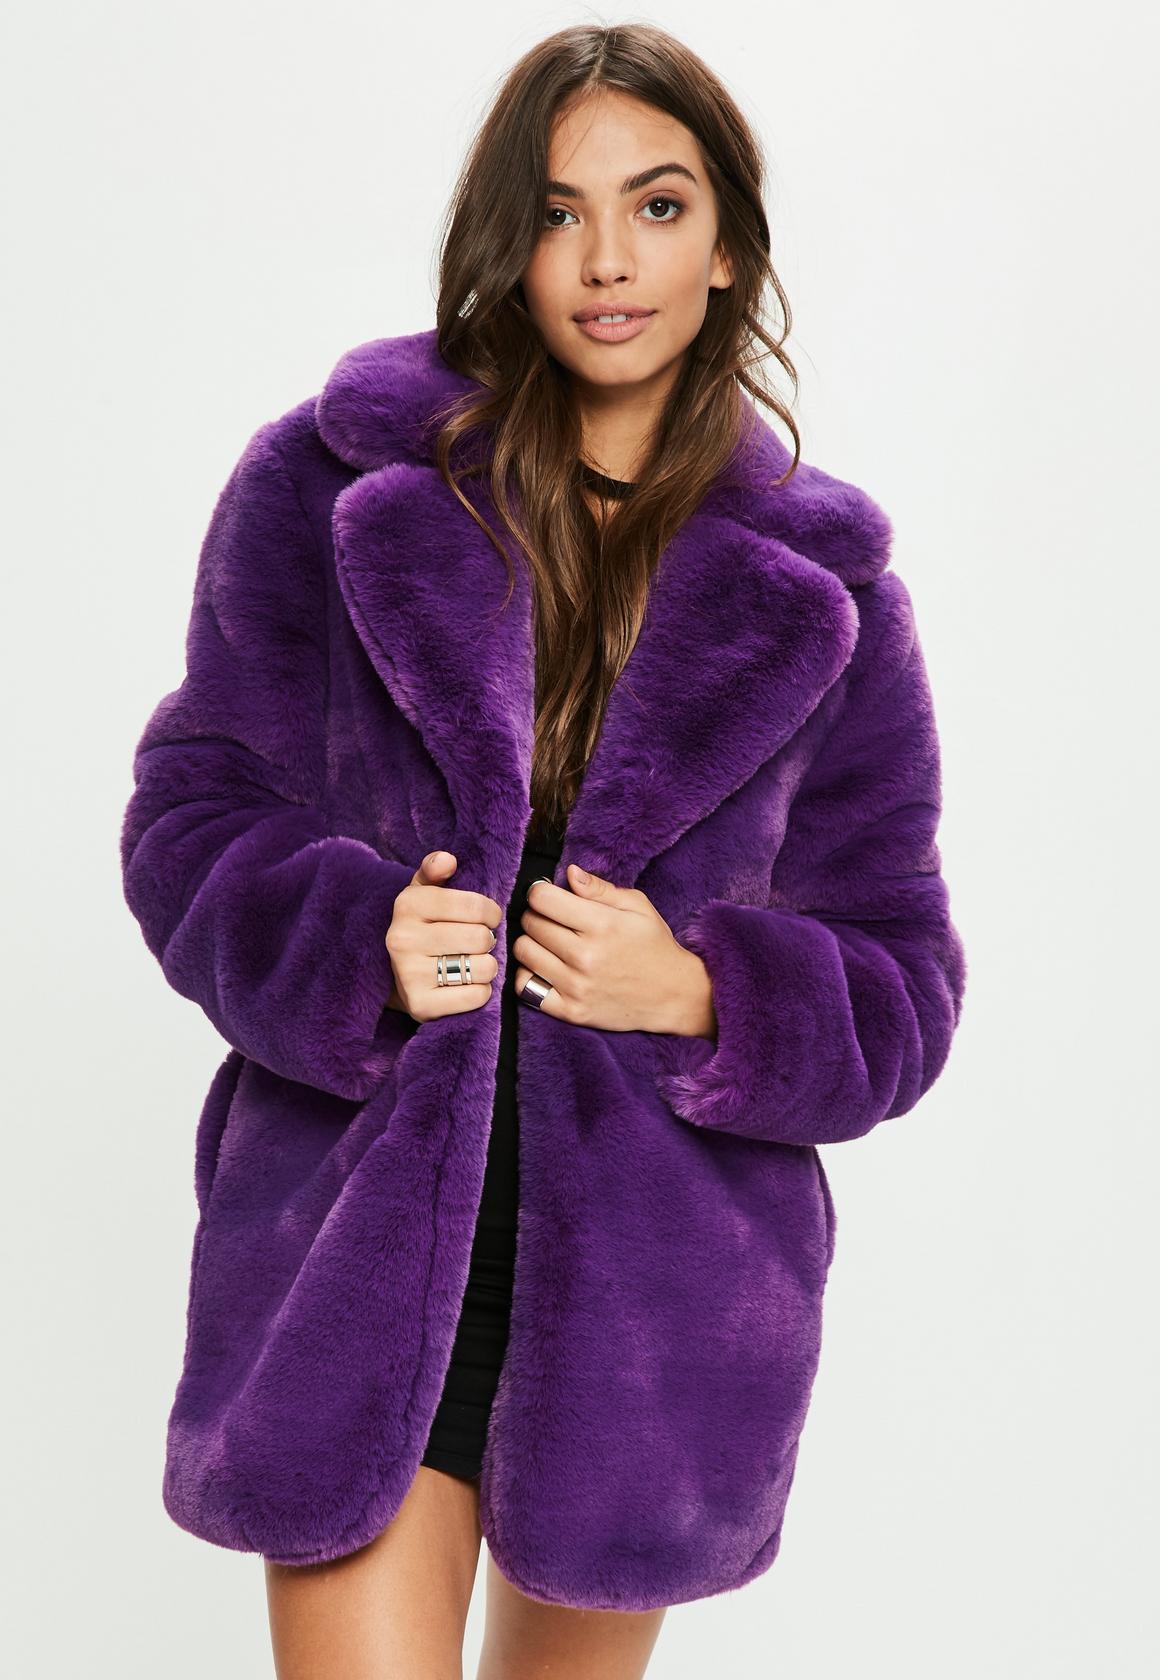 Missguided Faux Fur Coat $111 - MEFeater